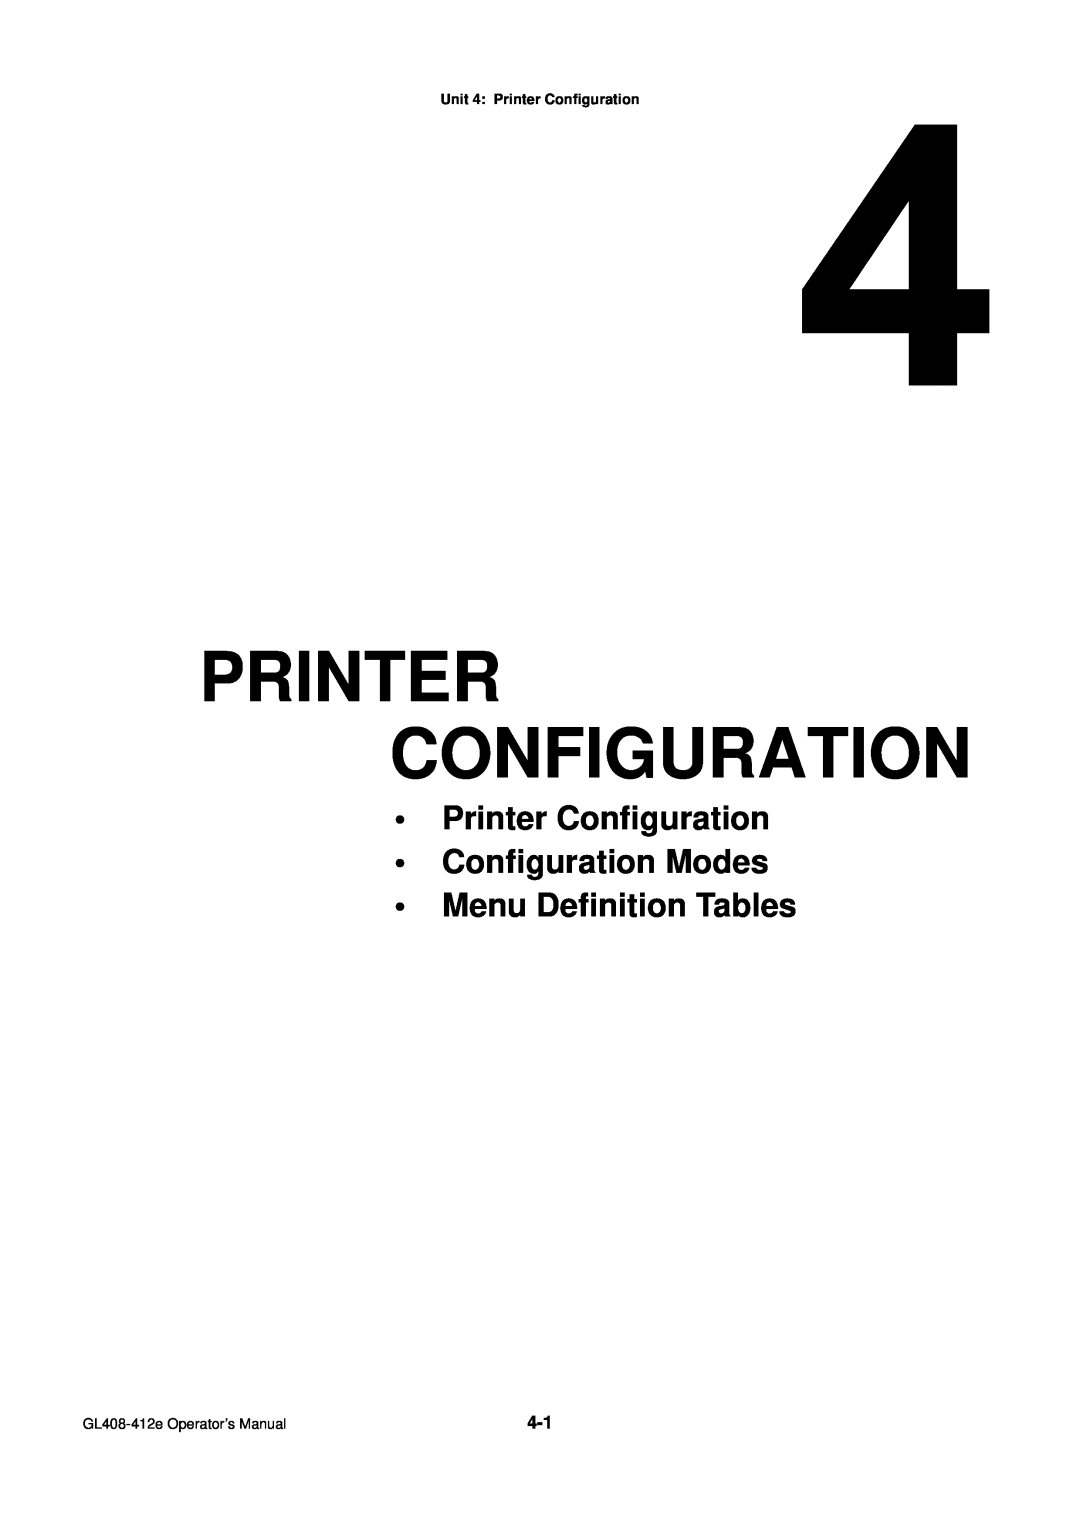 SATO GL4XXE manual Printer Configuration Configuration Modes Menu Definition Tables, Unit 4 Printer Configuration 